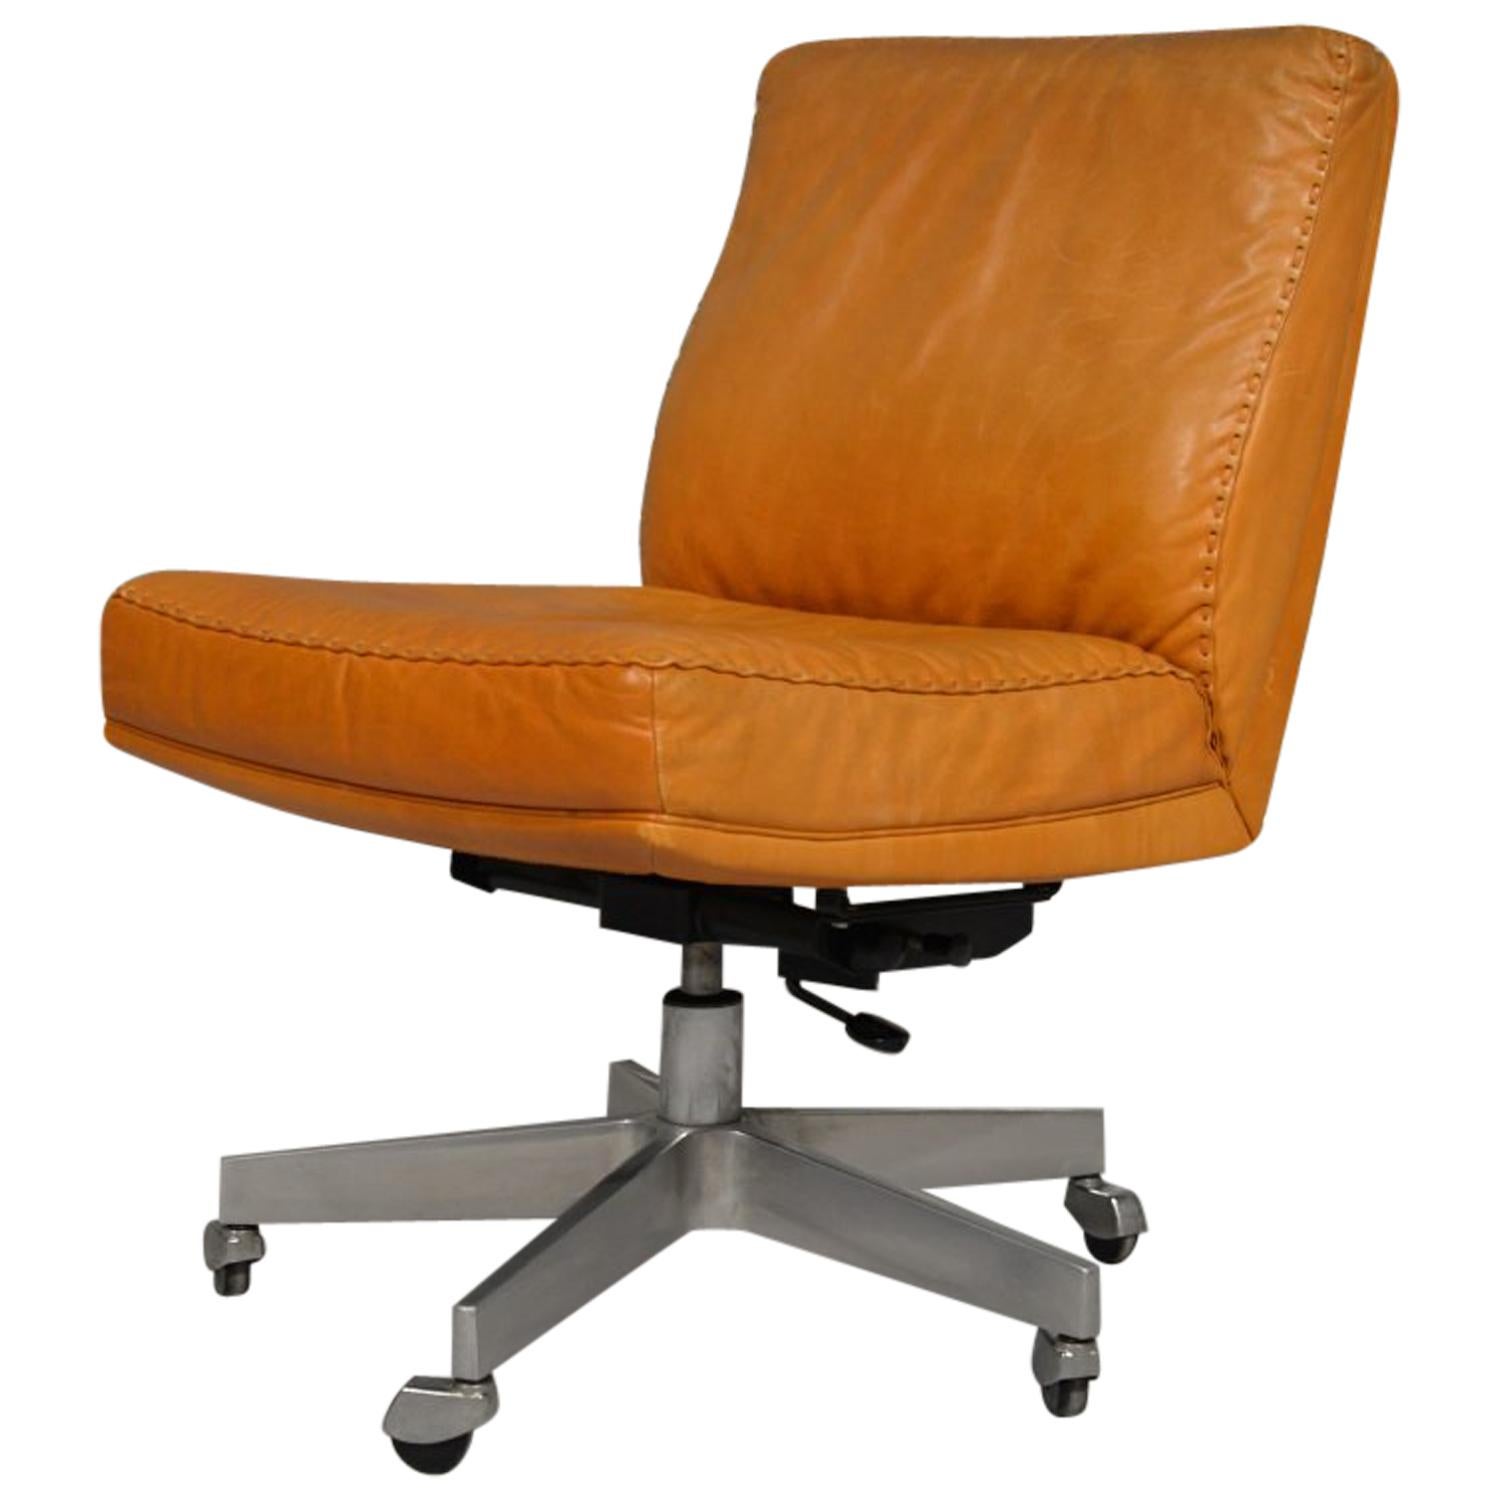 Vintage De Sede DS 35 Leather Swivel Office Chair on castors, Switzerland 1960s